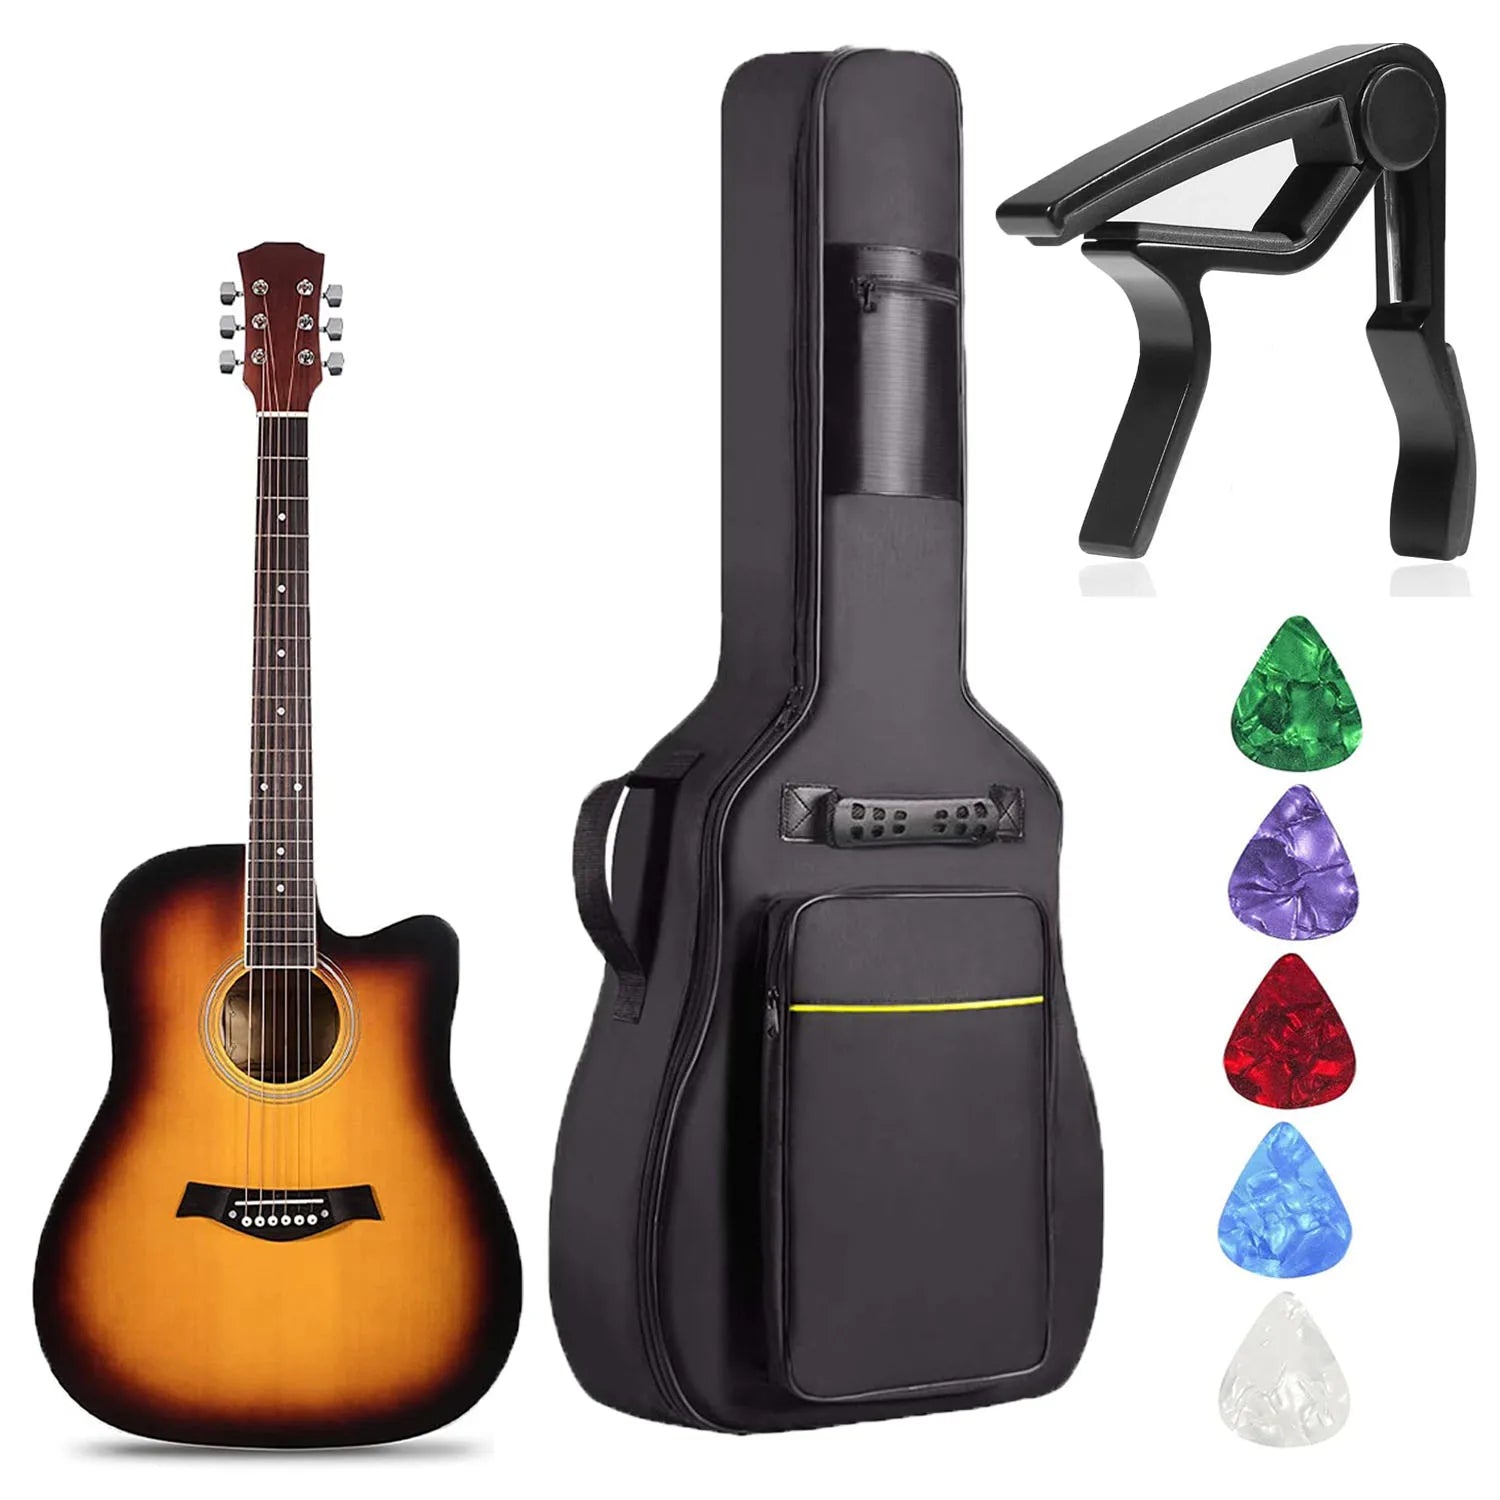 41 Inch Acoustic Guitar Bag Padding Resistant Dual Adjustable Shoulder Strap Guitar Case With Guitar Capo and 5 Guitar Picks - Lizard Vigilante